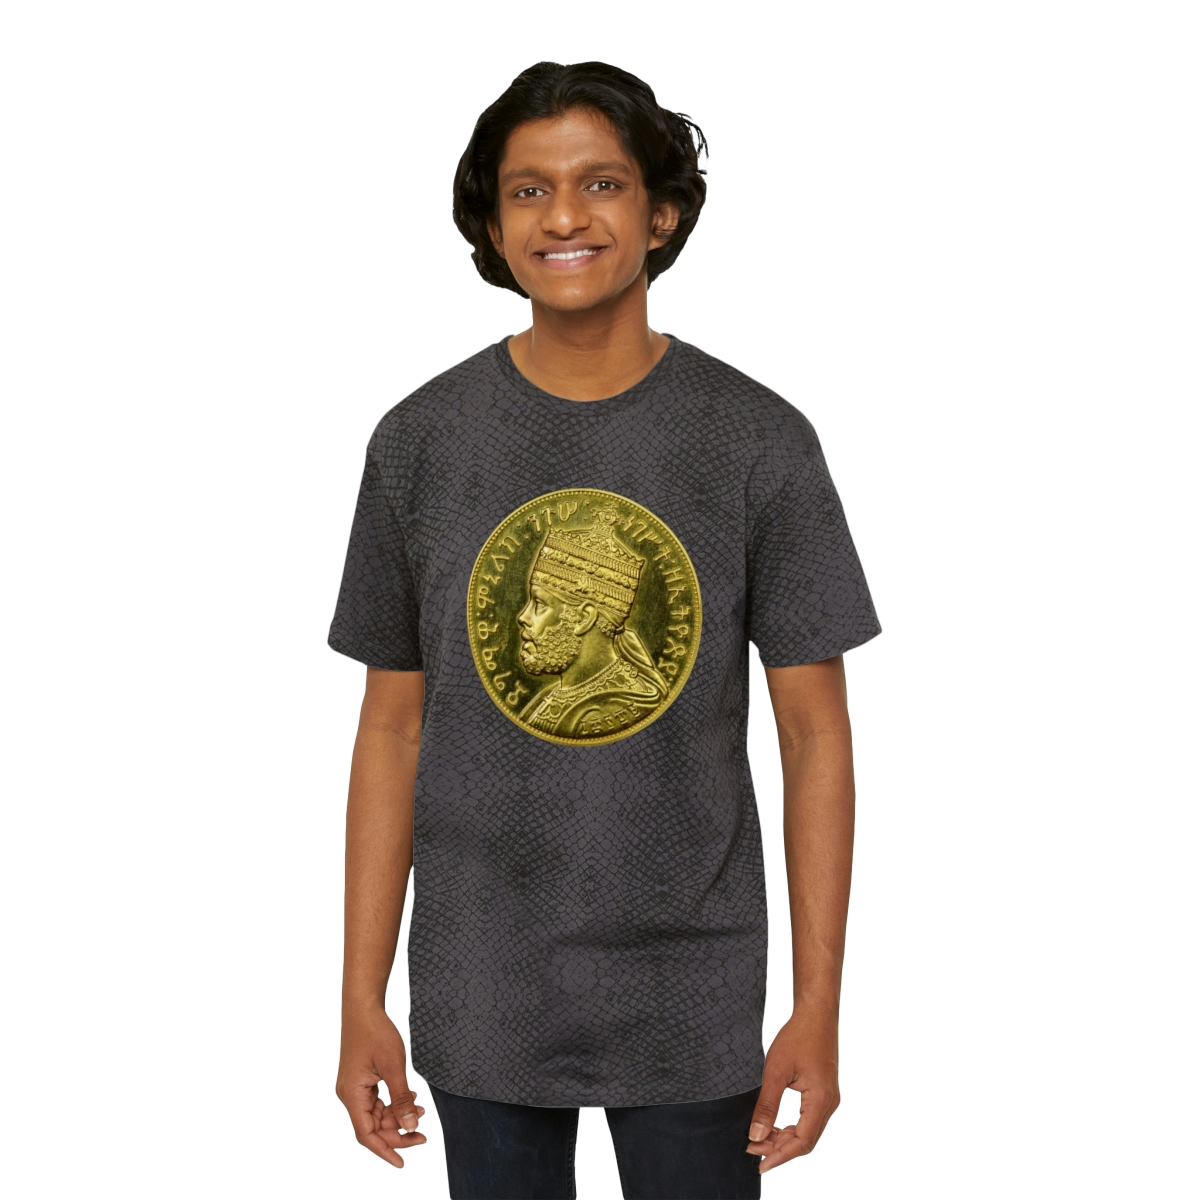 Menelik II - Jah Army Shirt